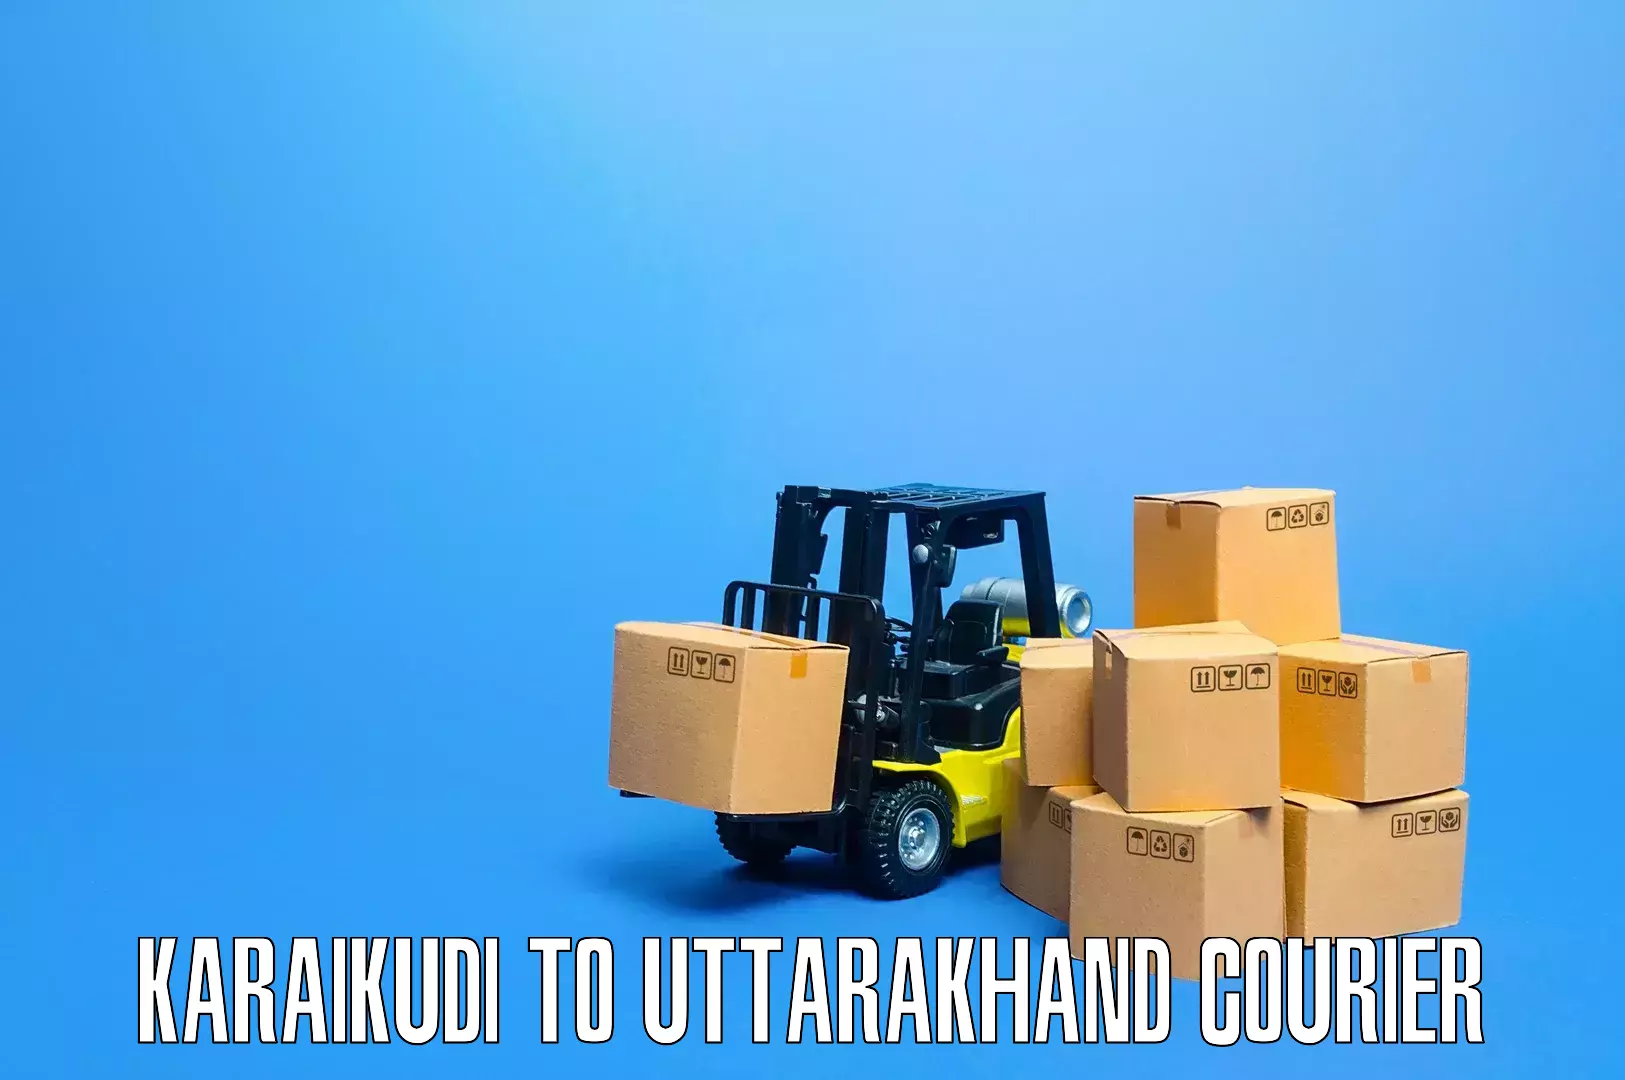 Full-service movers Karaikudi to Rishikesh